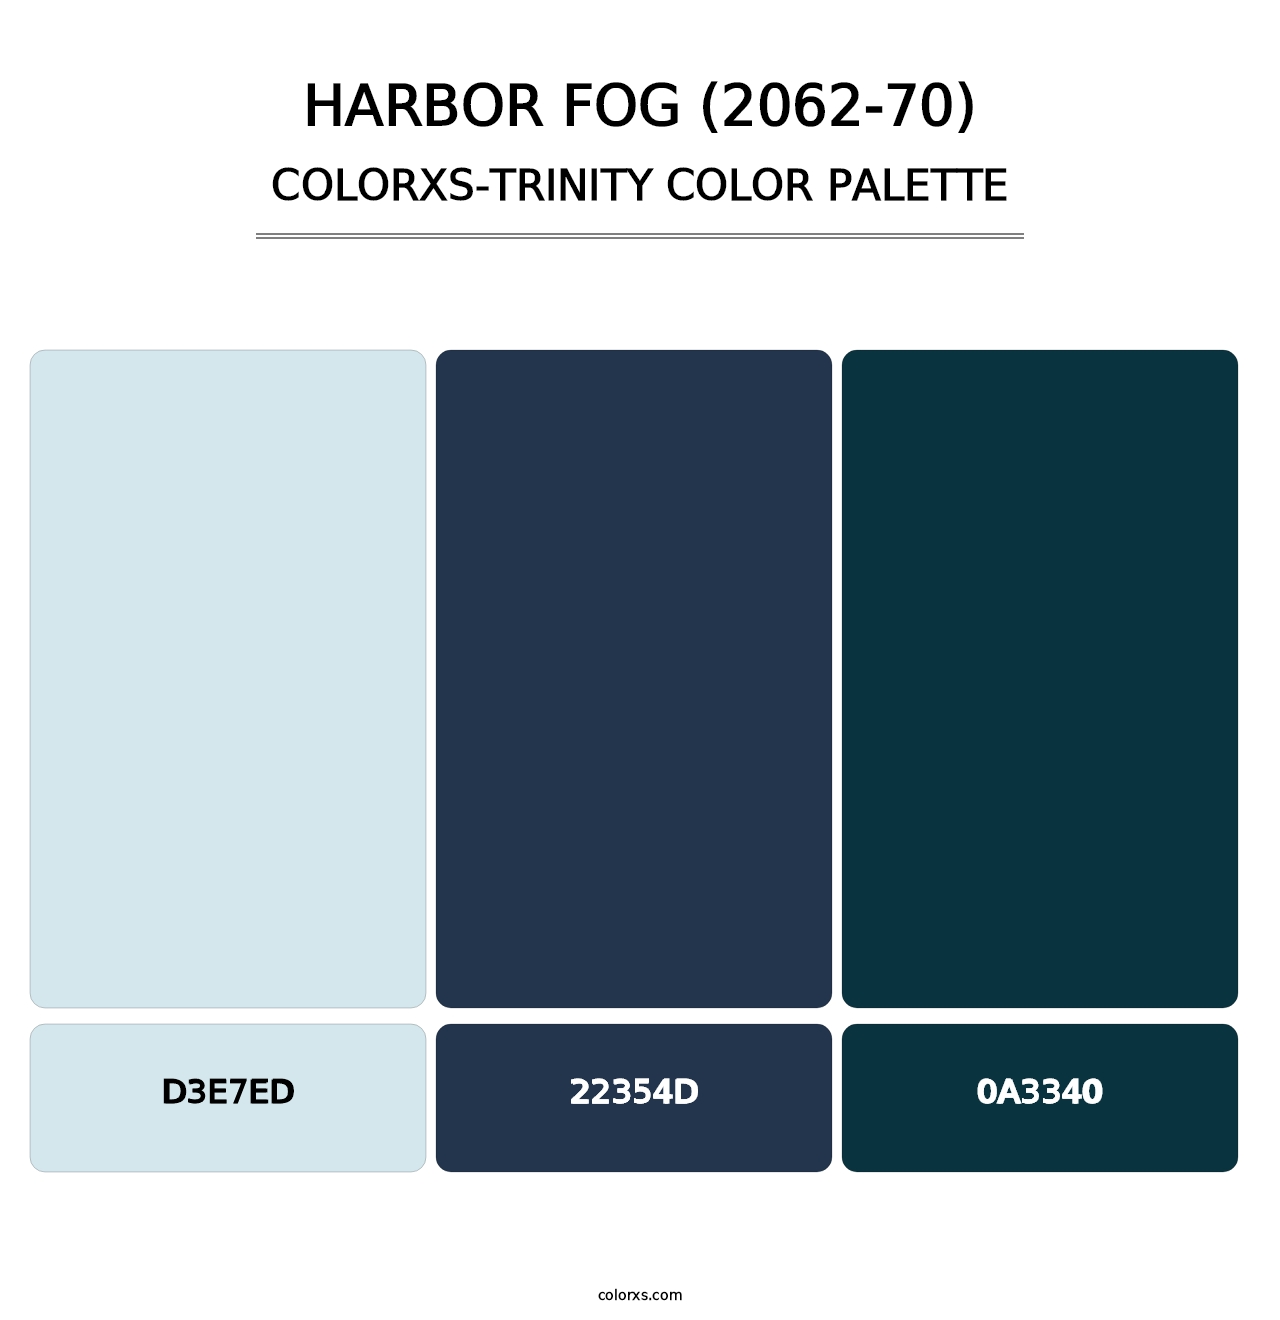 Harbor Fog (2062-70) - Colorxs Trinity Palette